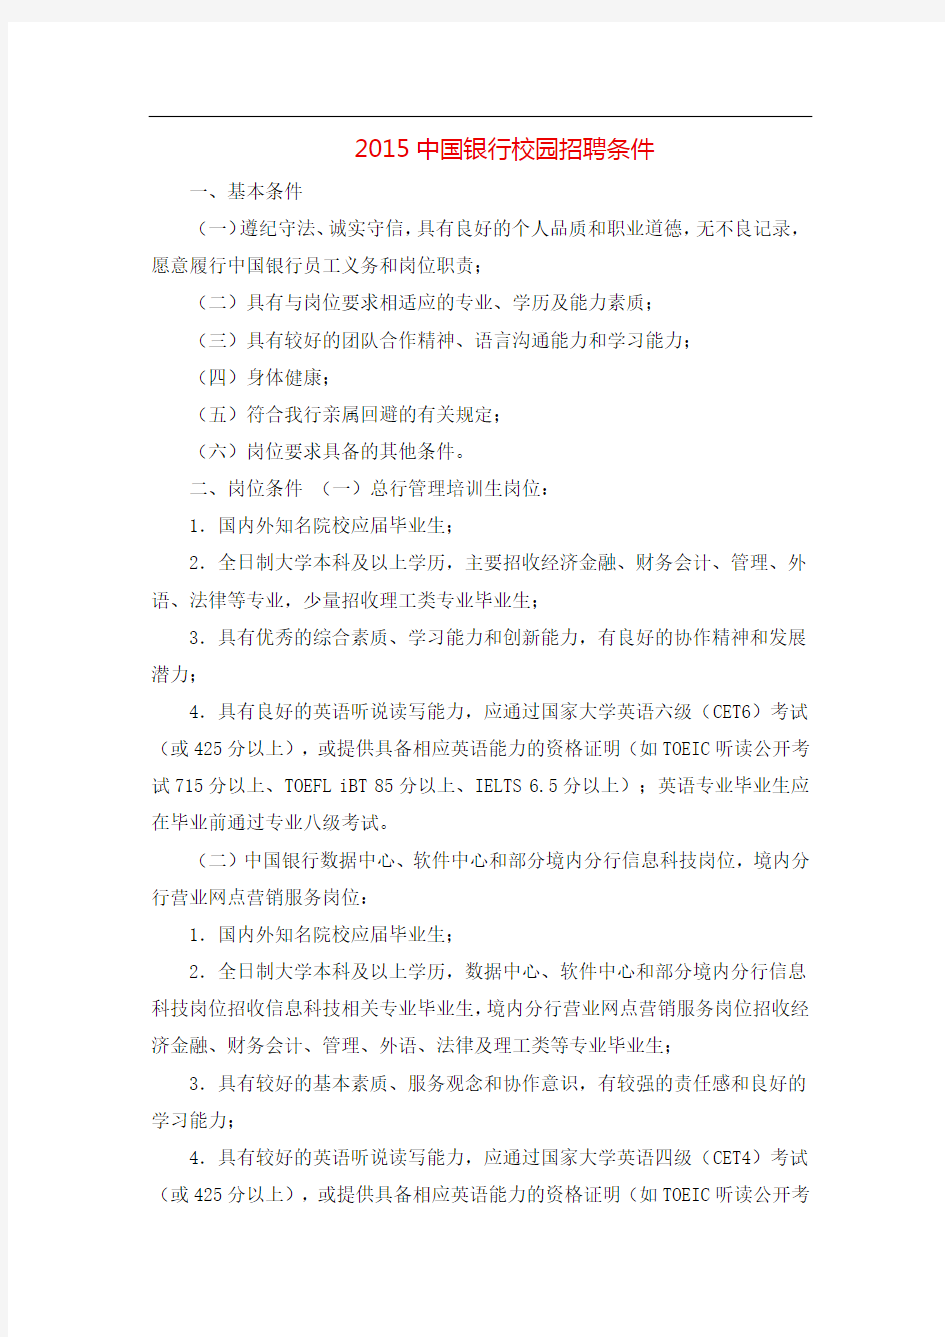 XX5中国银行校园招聘条件